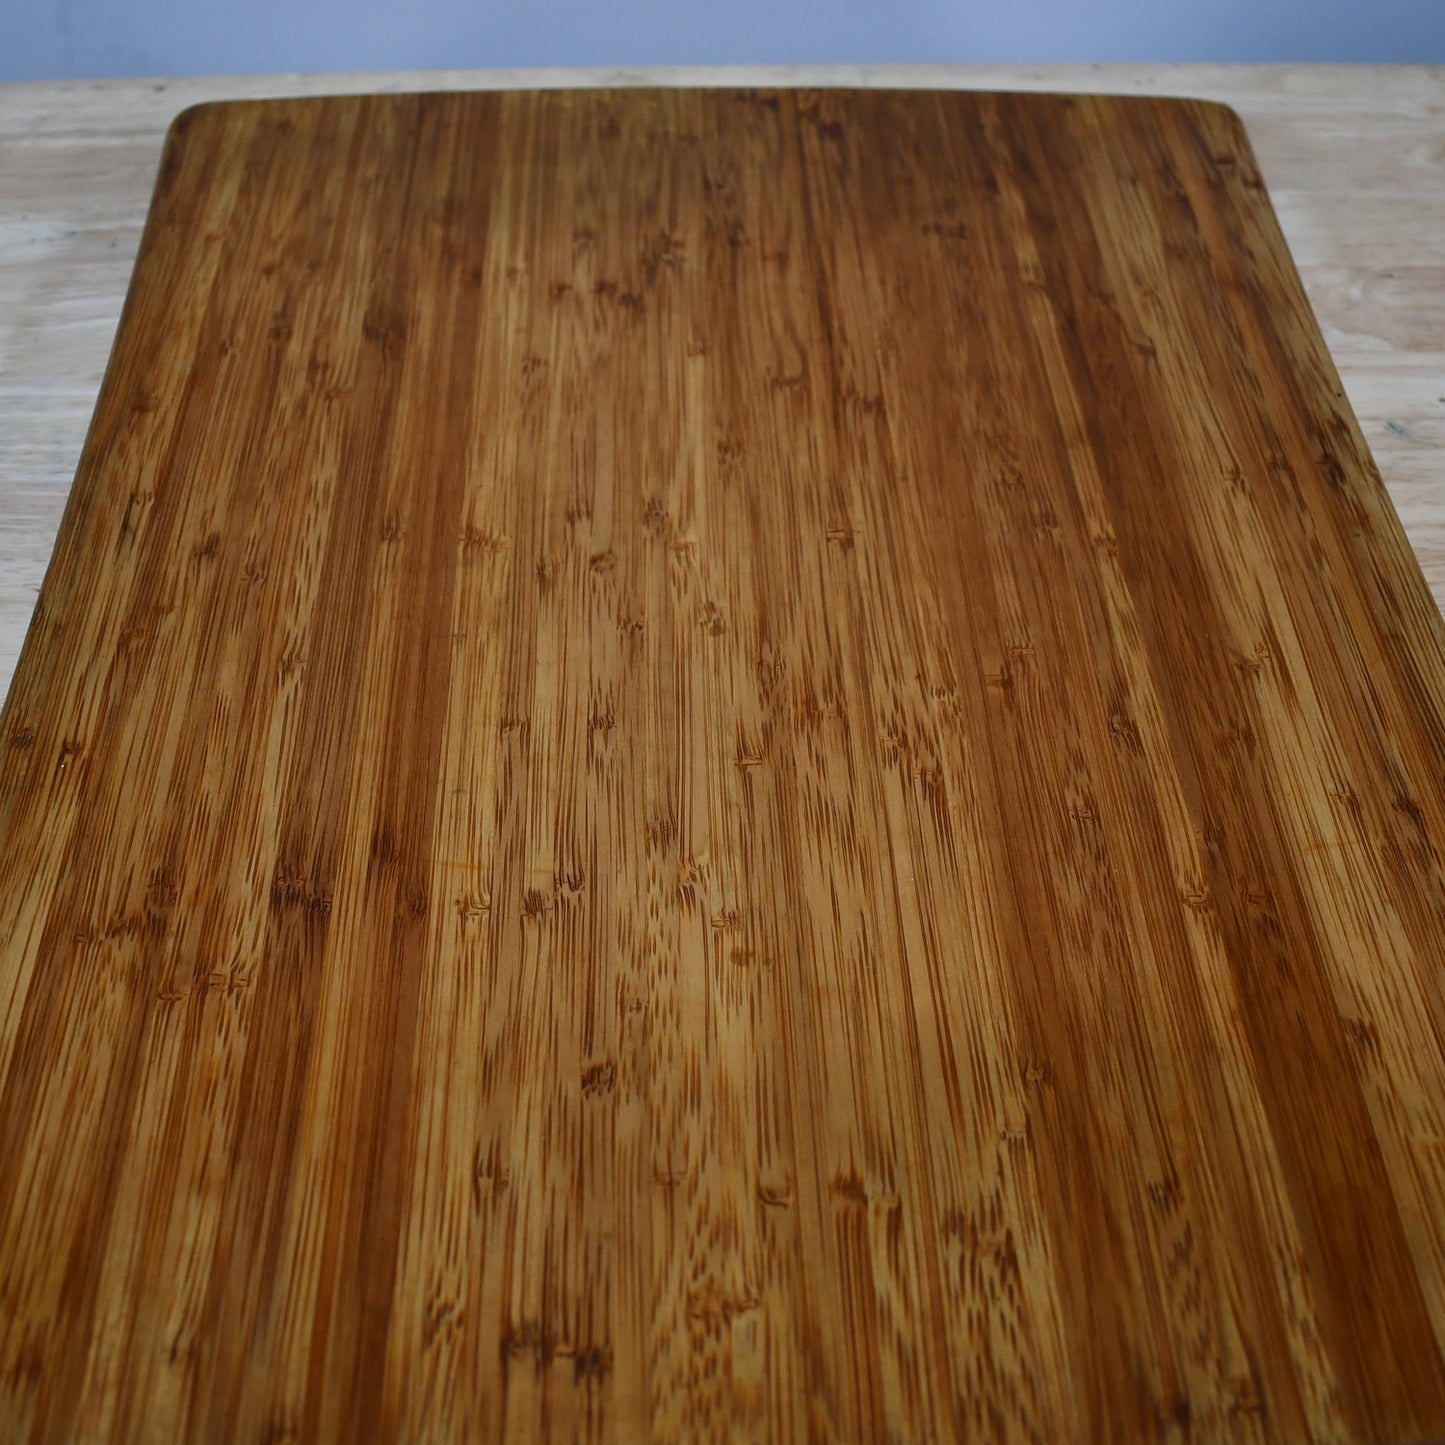 TotalBoat Wood Honey Food Safe Wood Finish on a finished cutting board